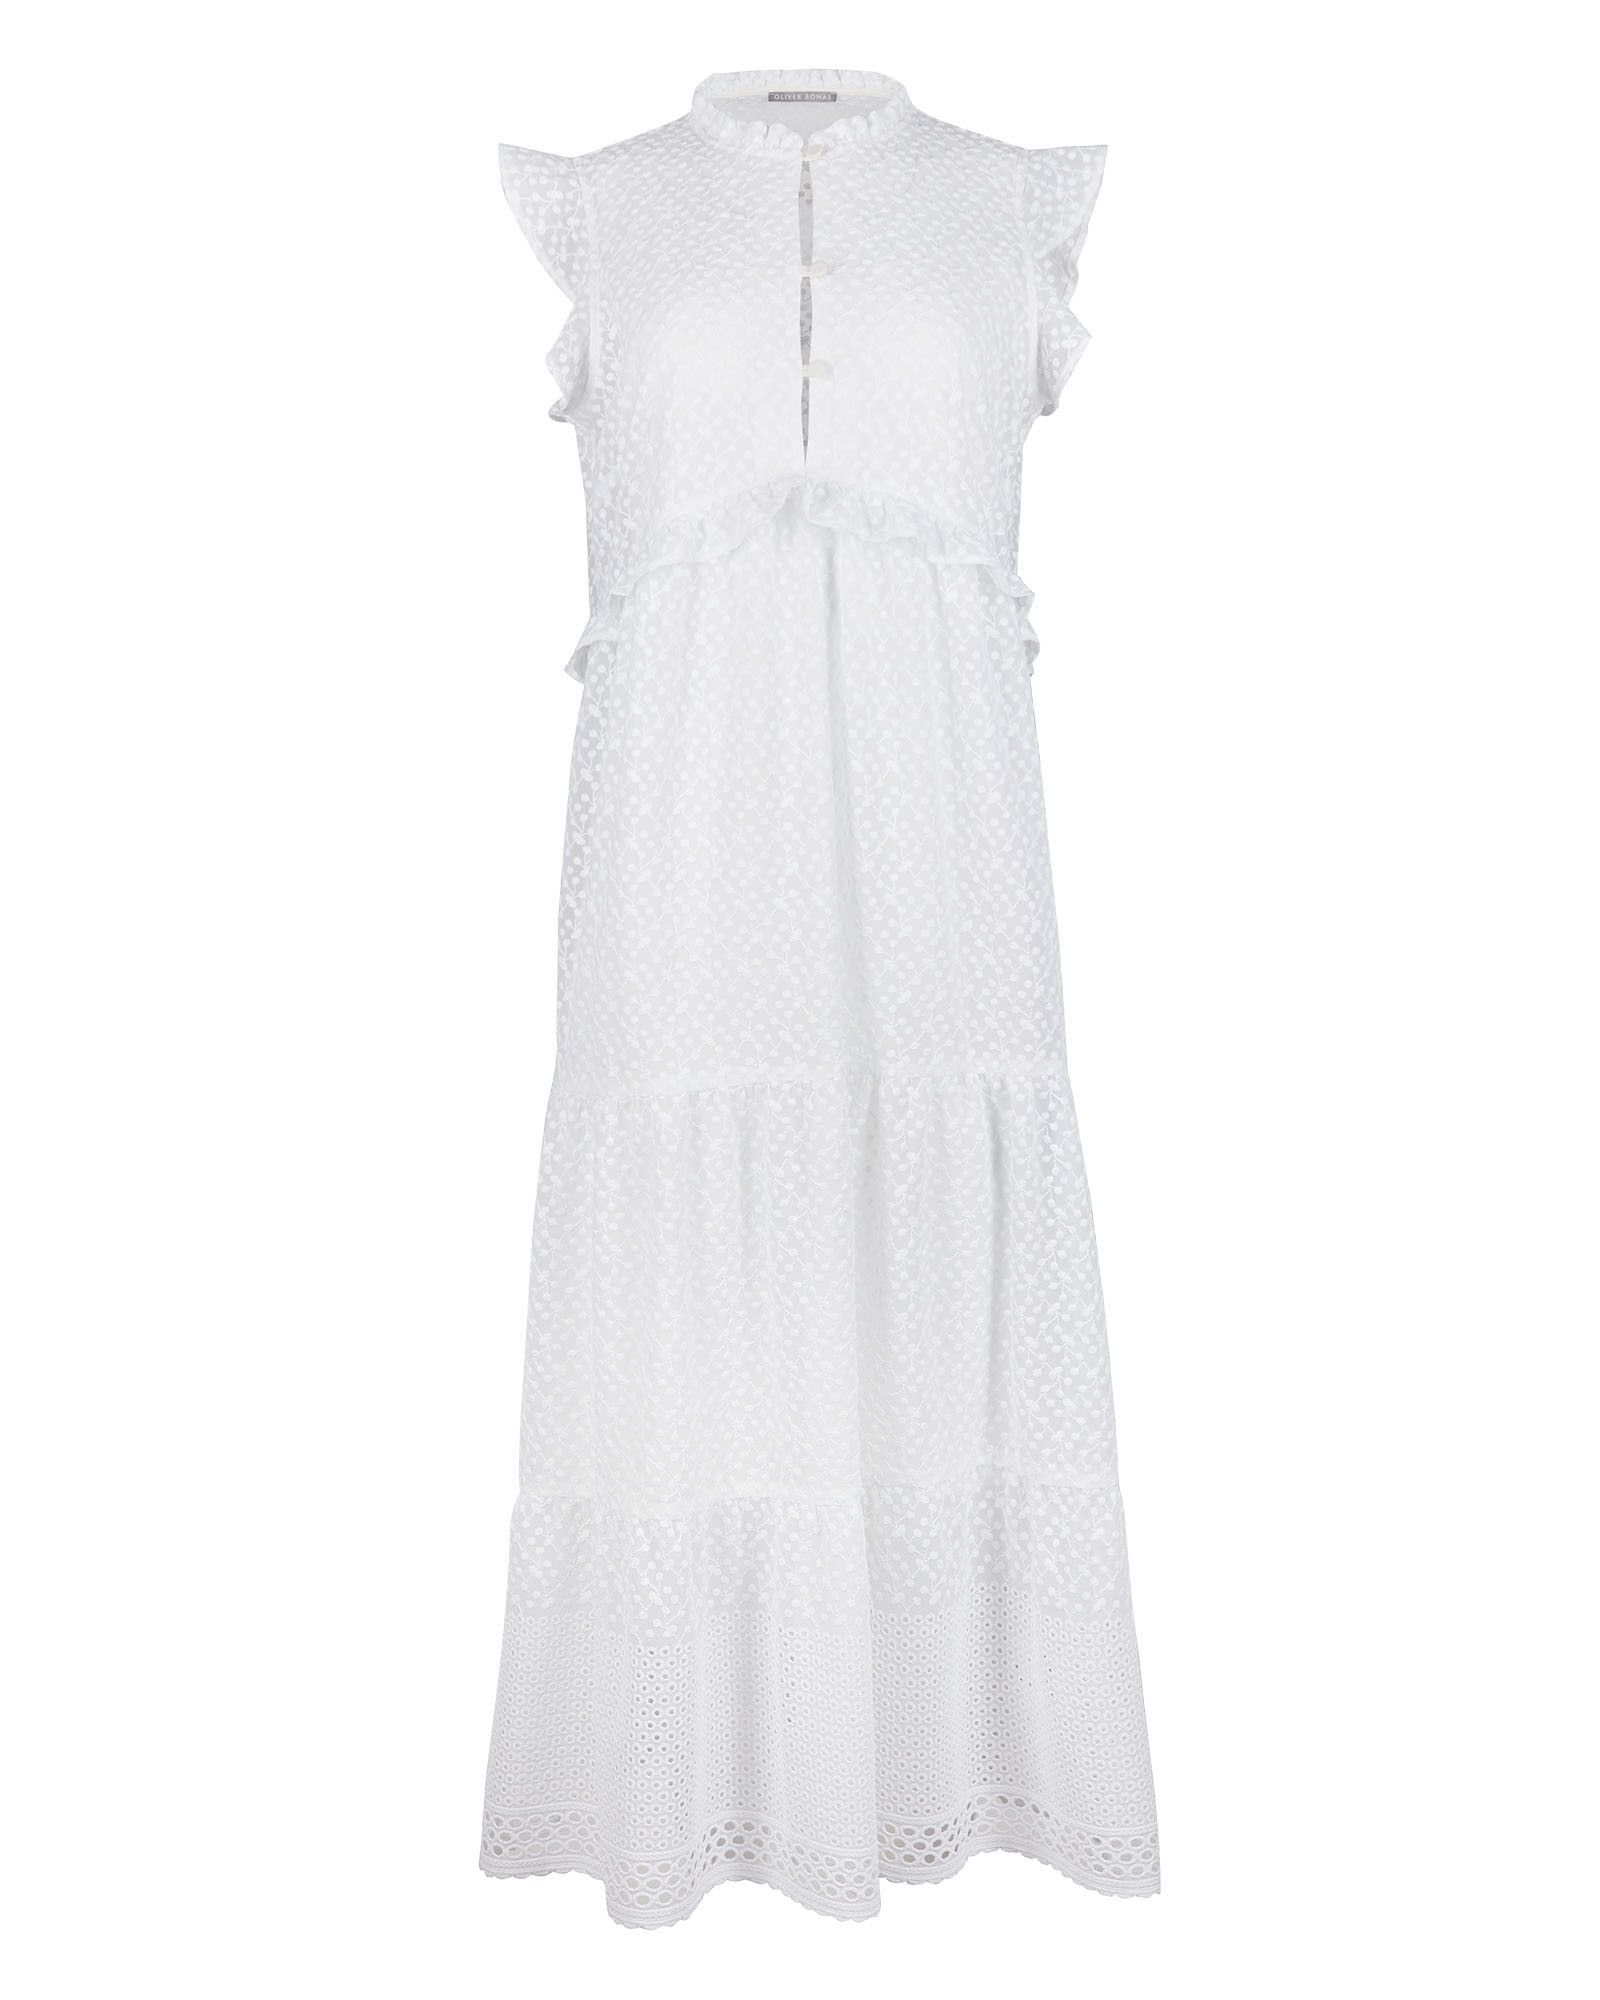 Broderie Sleeveless White Midi Dress | Oliver Bonas